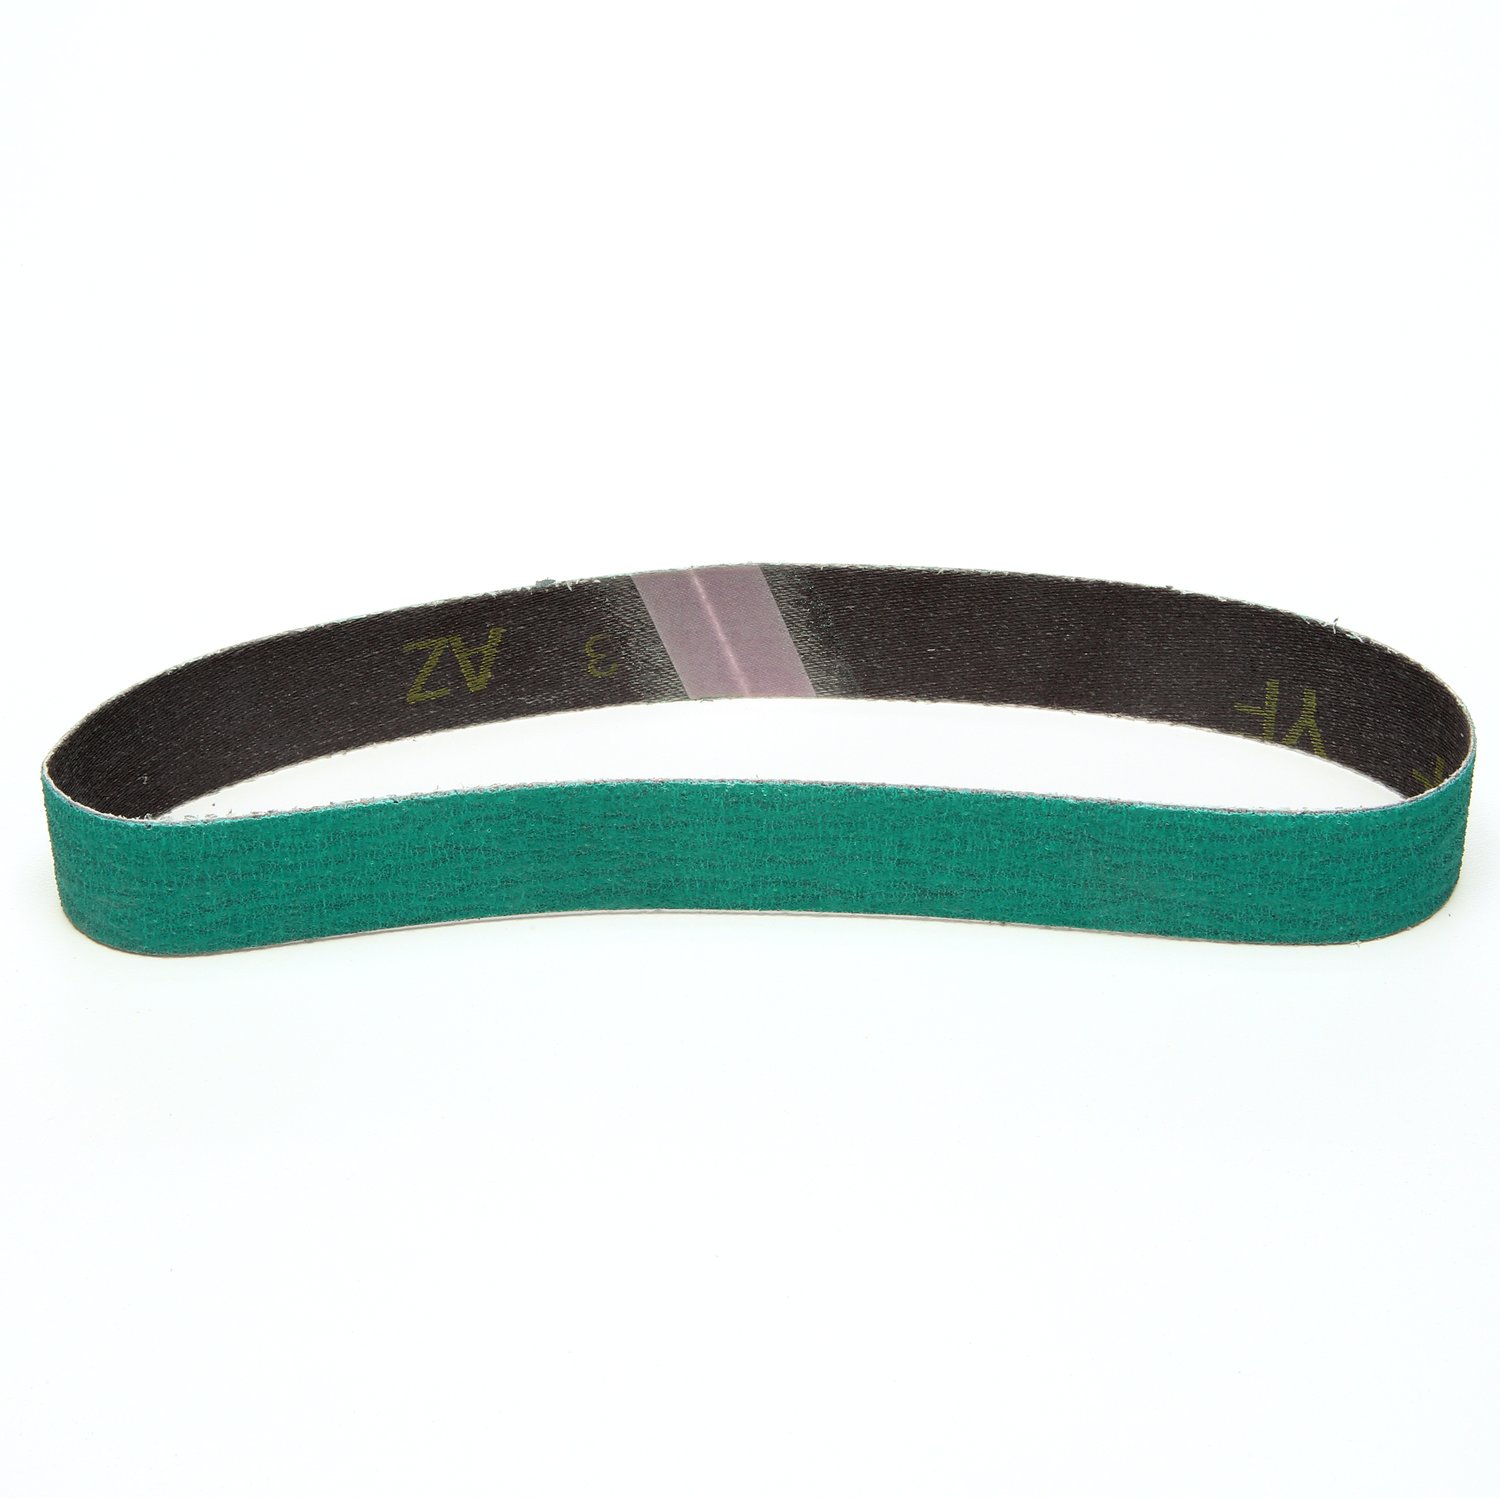 7010516940 - 3M Cloth Belt 577F, 80 YF-weight, 1-1/2 in x 25 in, Fabri-lok,
Single-flex